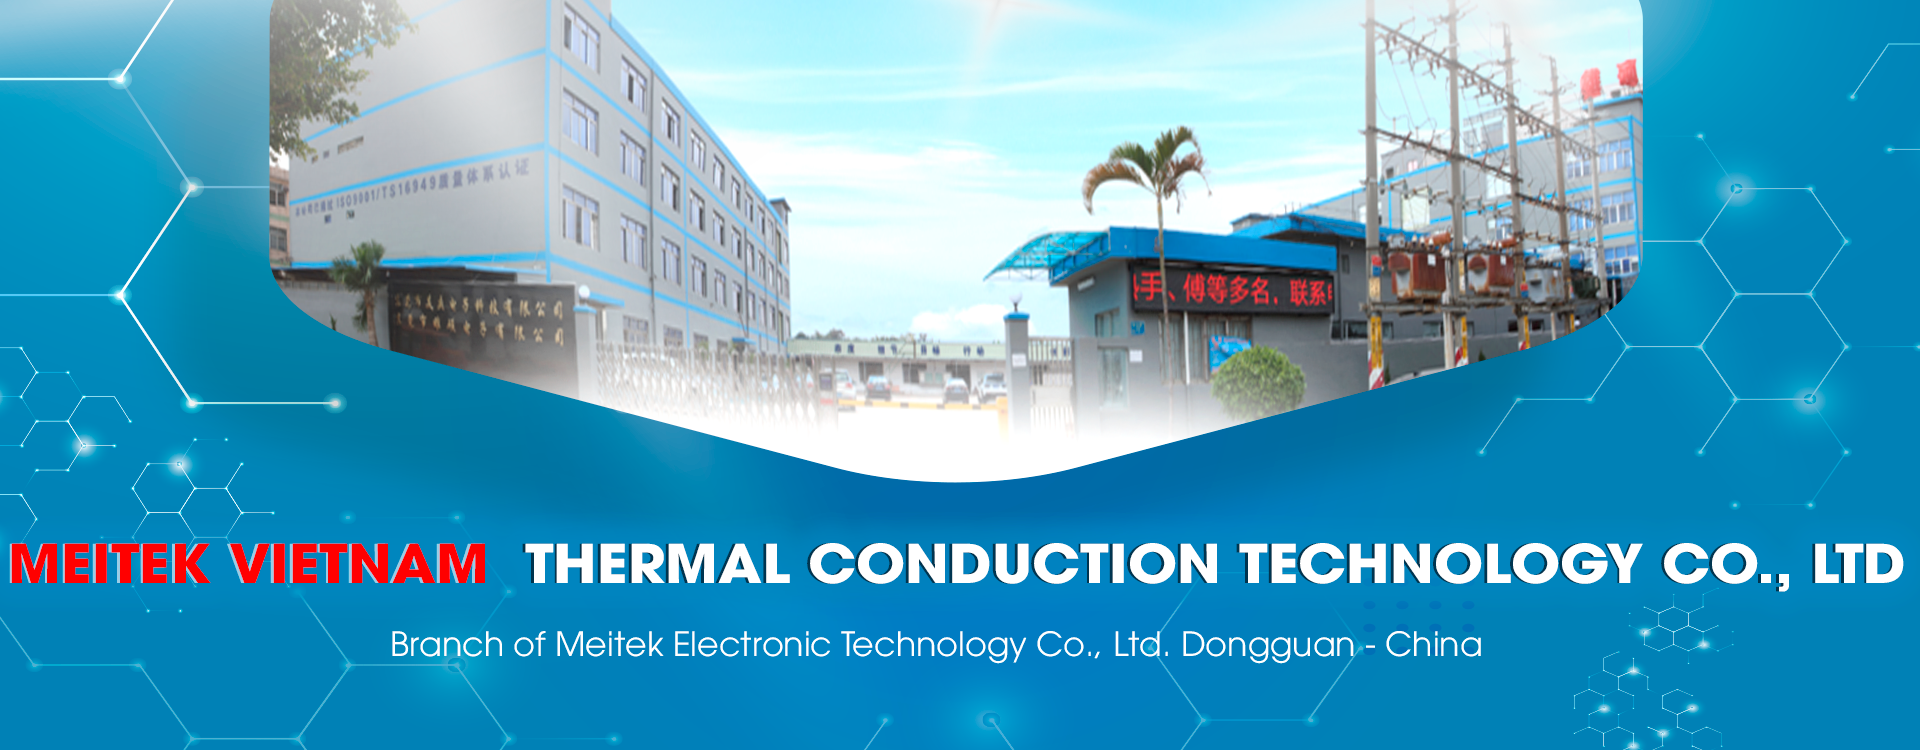 MEITEK VIETNAM THERMAL CONDUCTION TECHNOLOGY CO., LTD